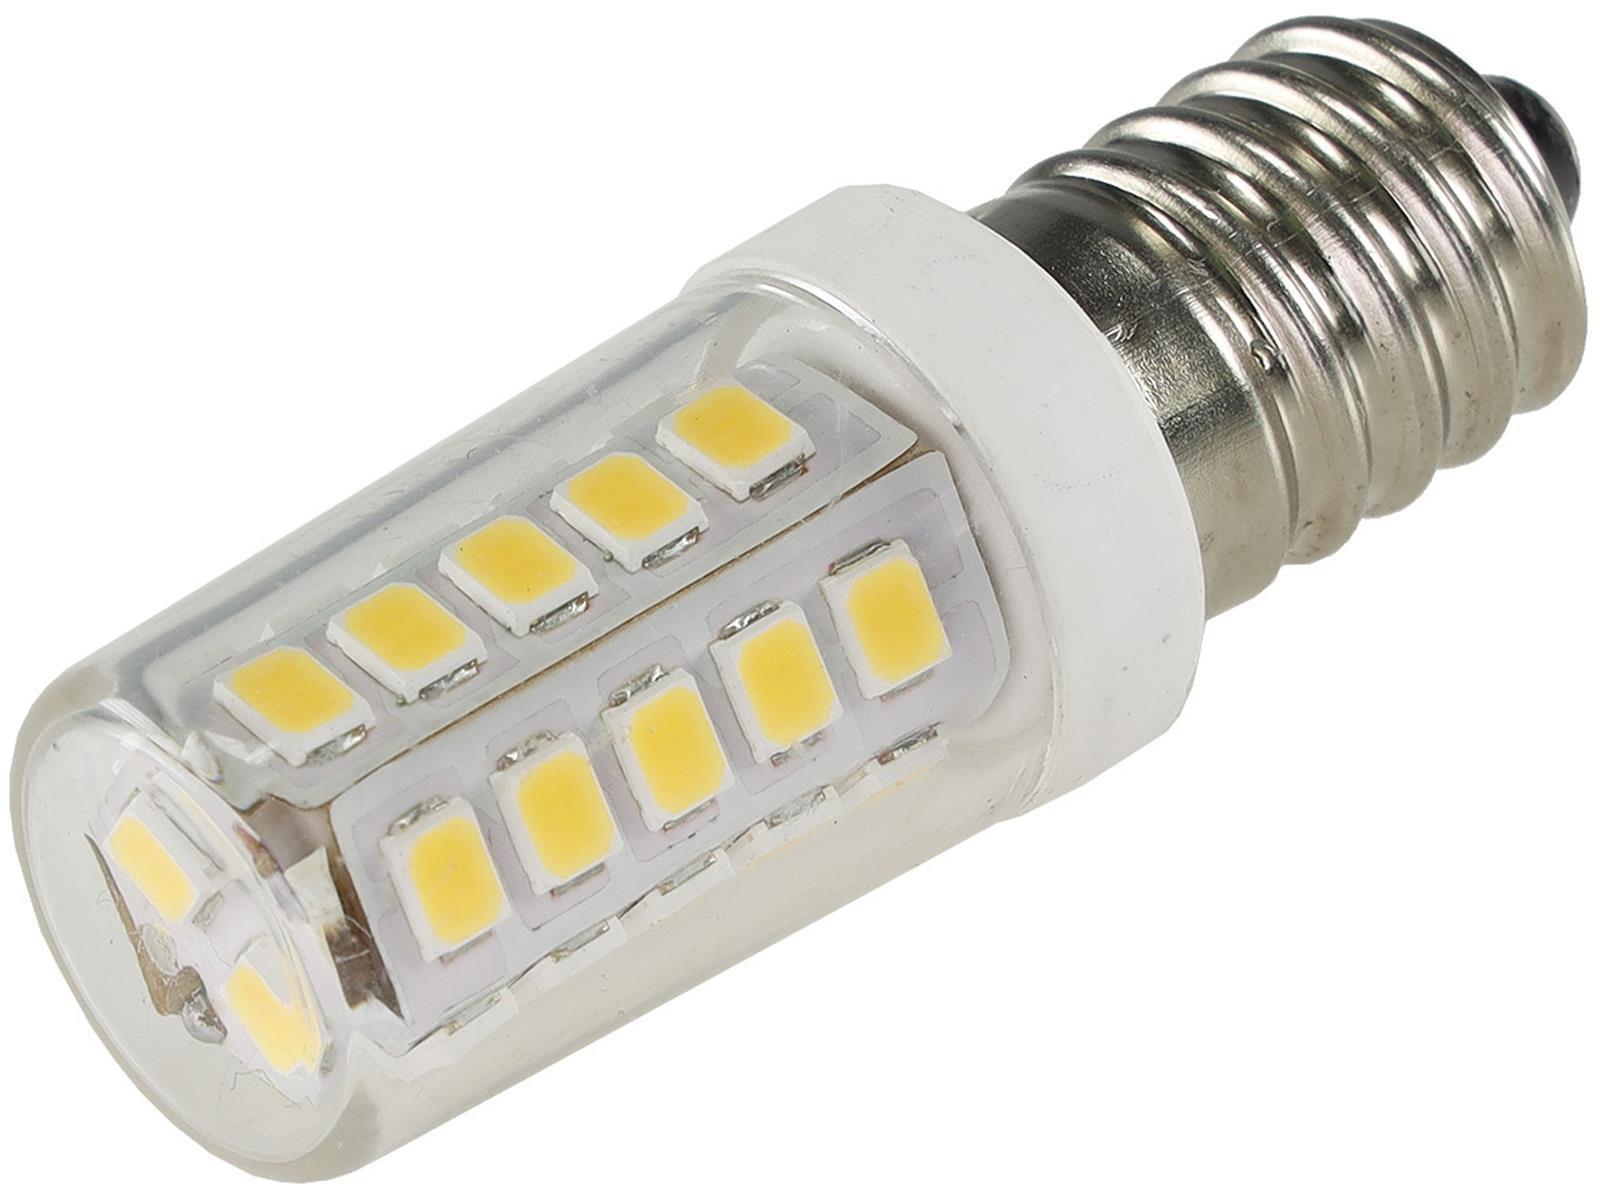 LED Lampe E14 Mini, neutralweiß4000k, 380lm, 300°, 230V, 3W, ØxL17x51mm